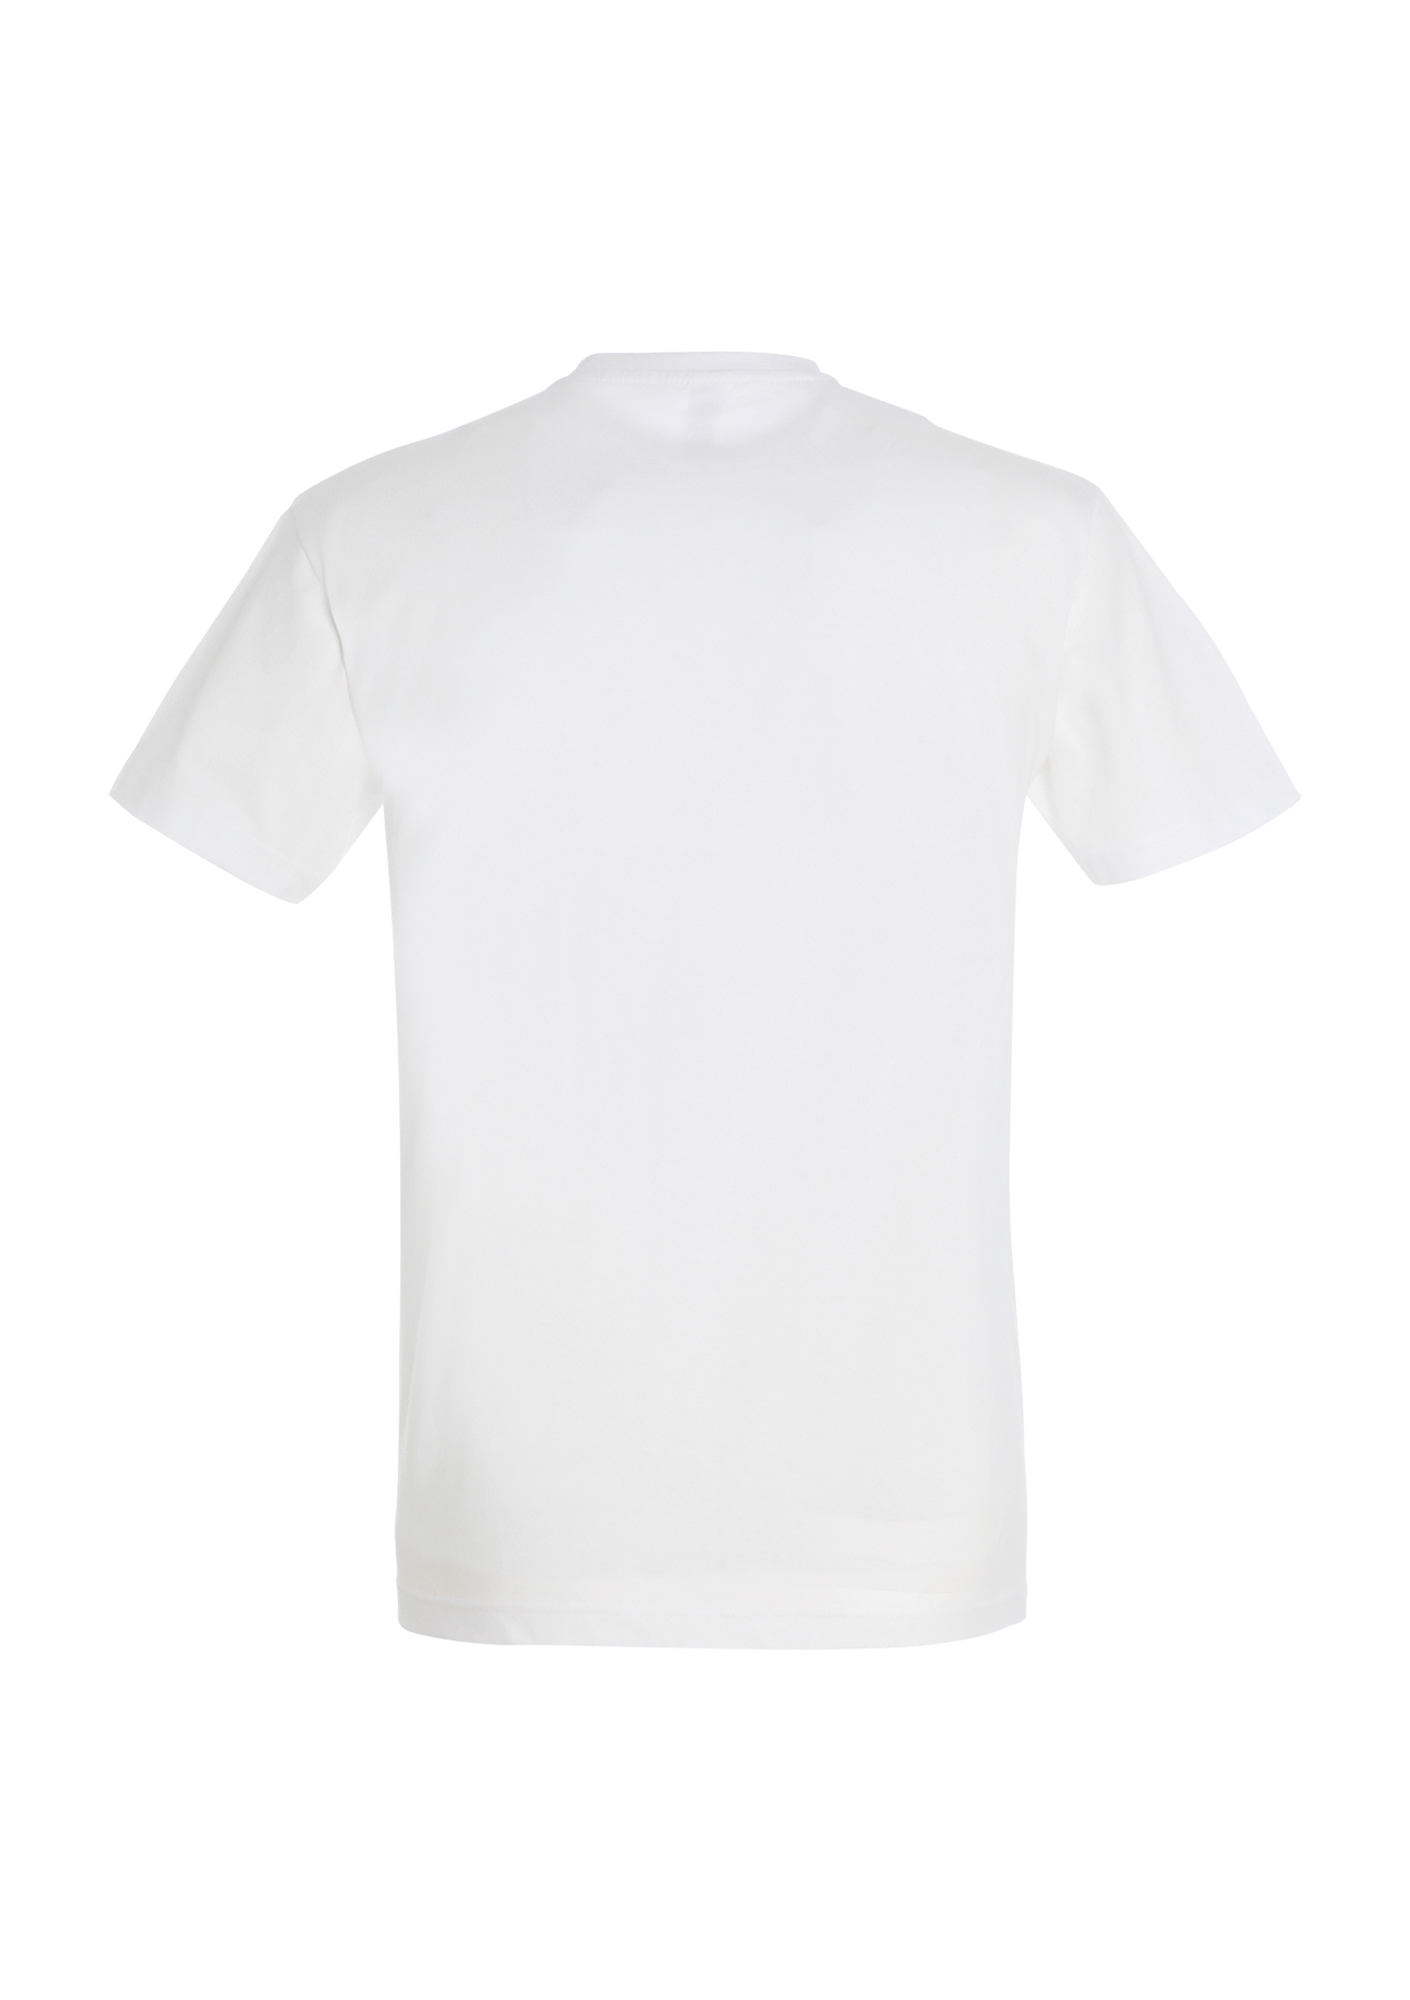 T-shirt Homme premium "100 et Or" Blanc - pn11500102B_1